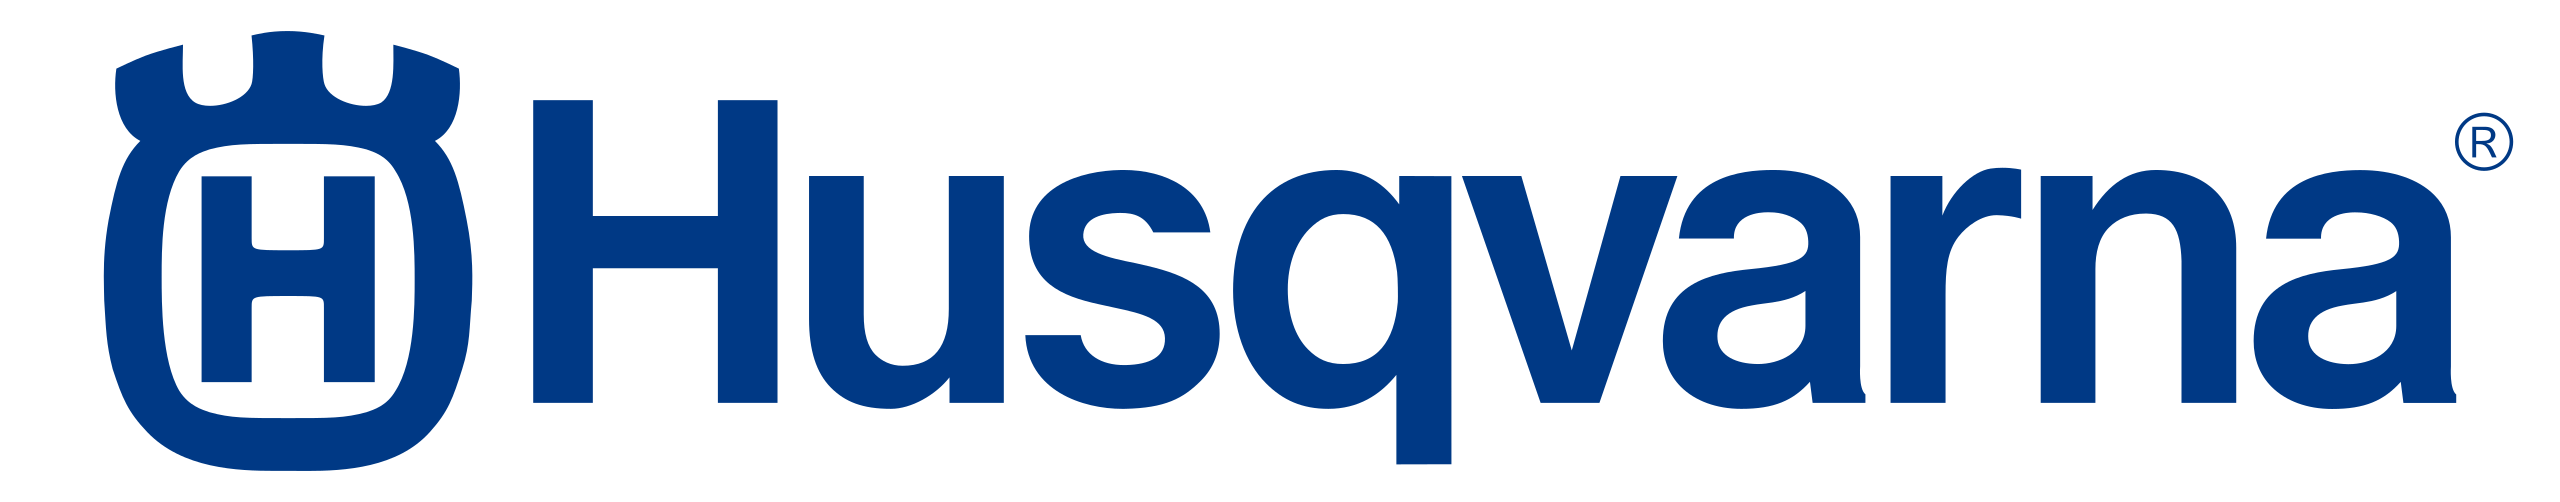 File:Husqvarna logo.svg - Wikimedia Commons